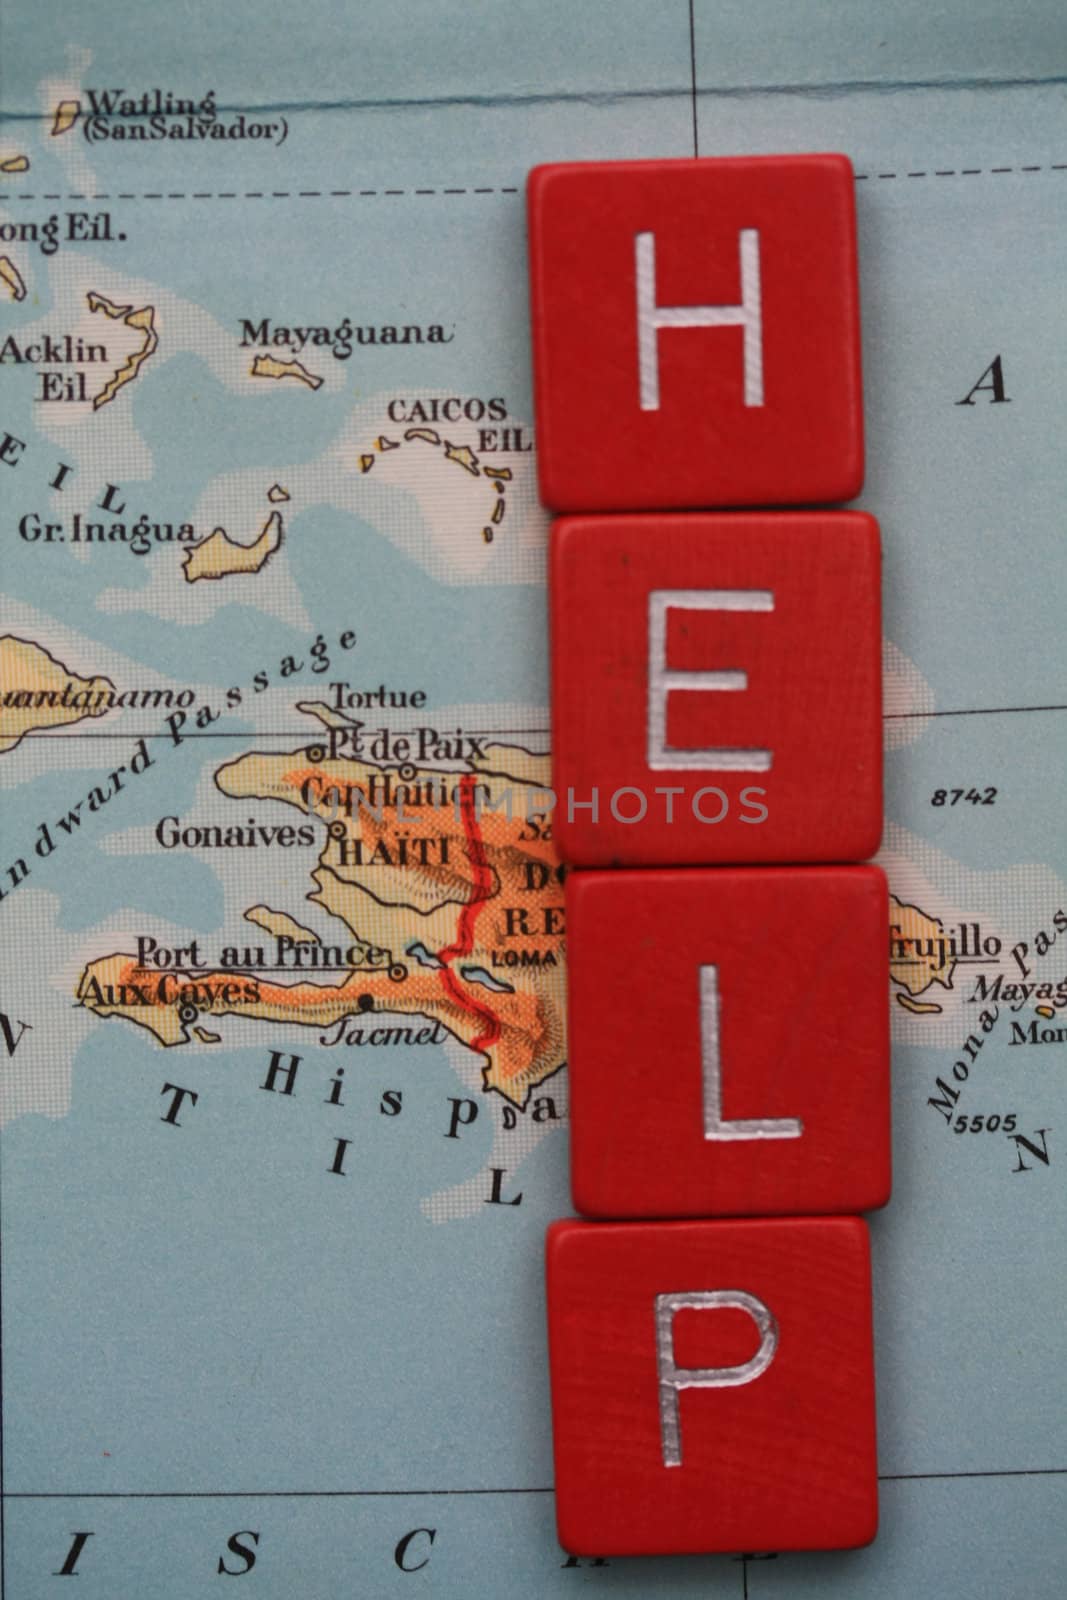 Help Haiti - download will be donated! by studioportosabbia